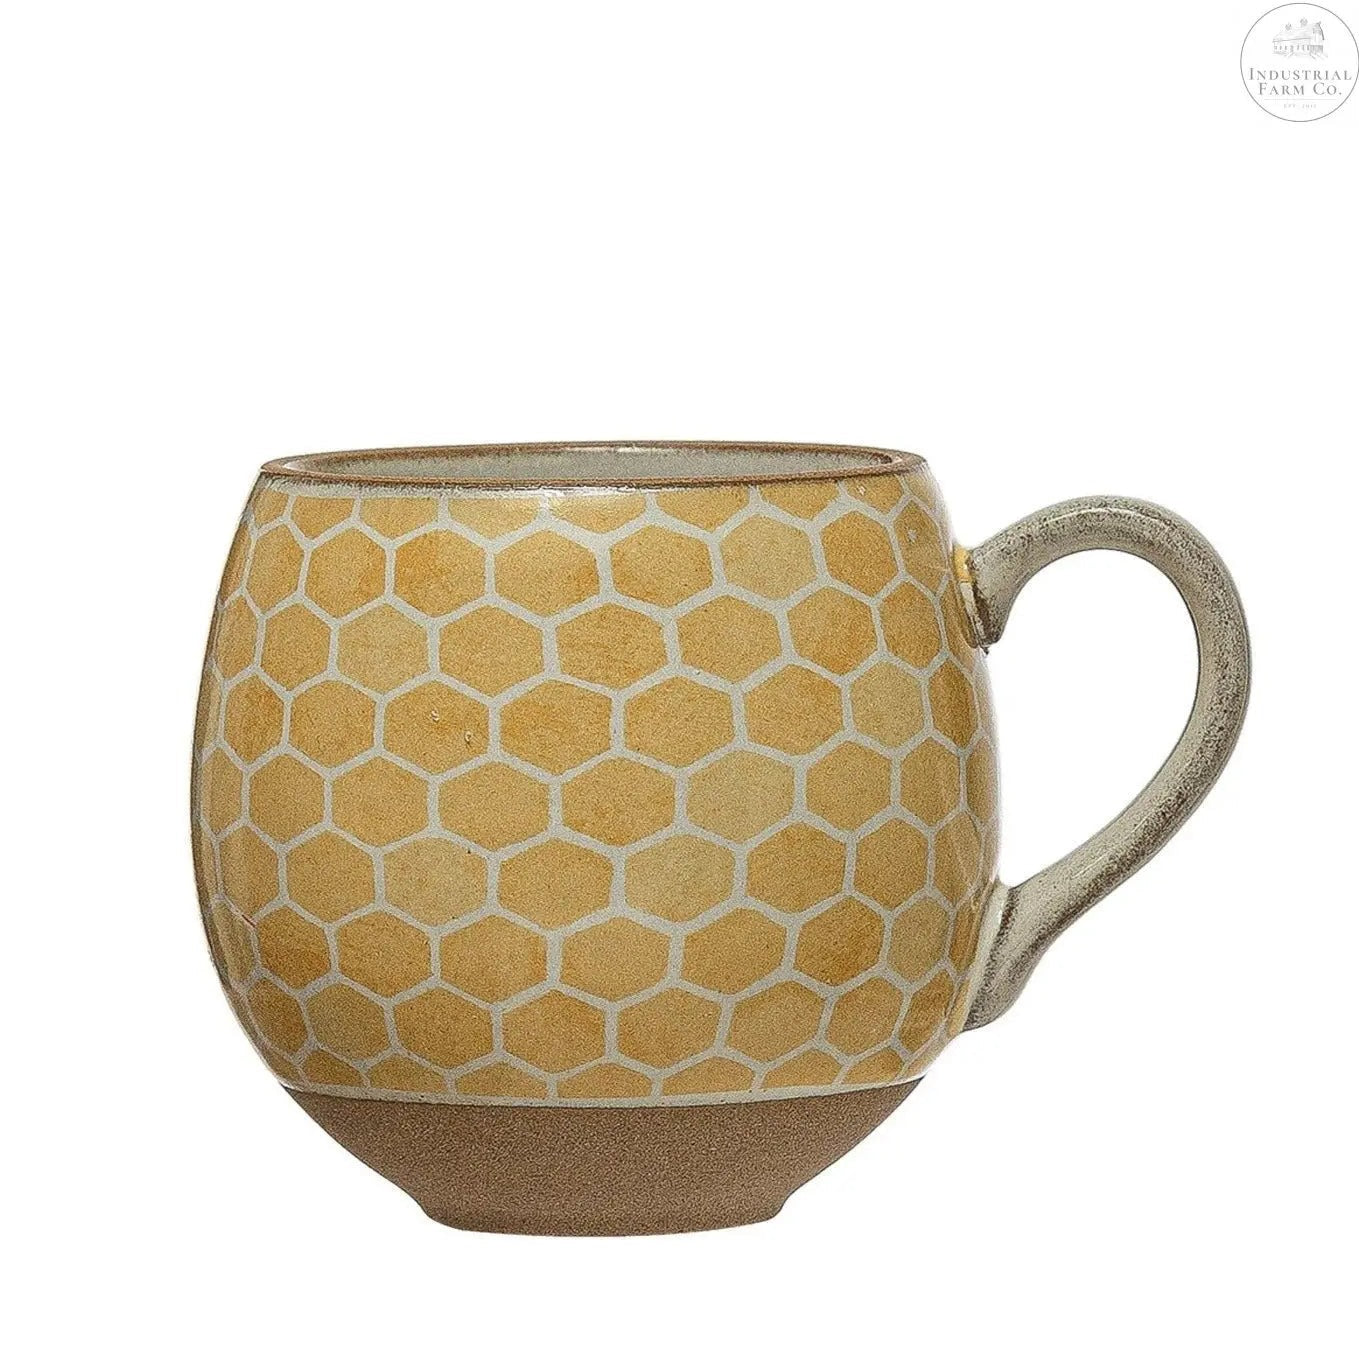 Bee Inspired Spring Mug     | Industrial Farm Co